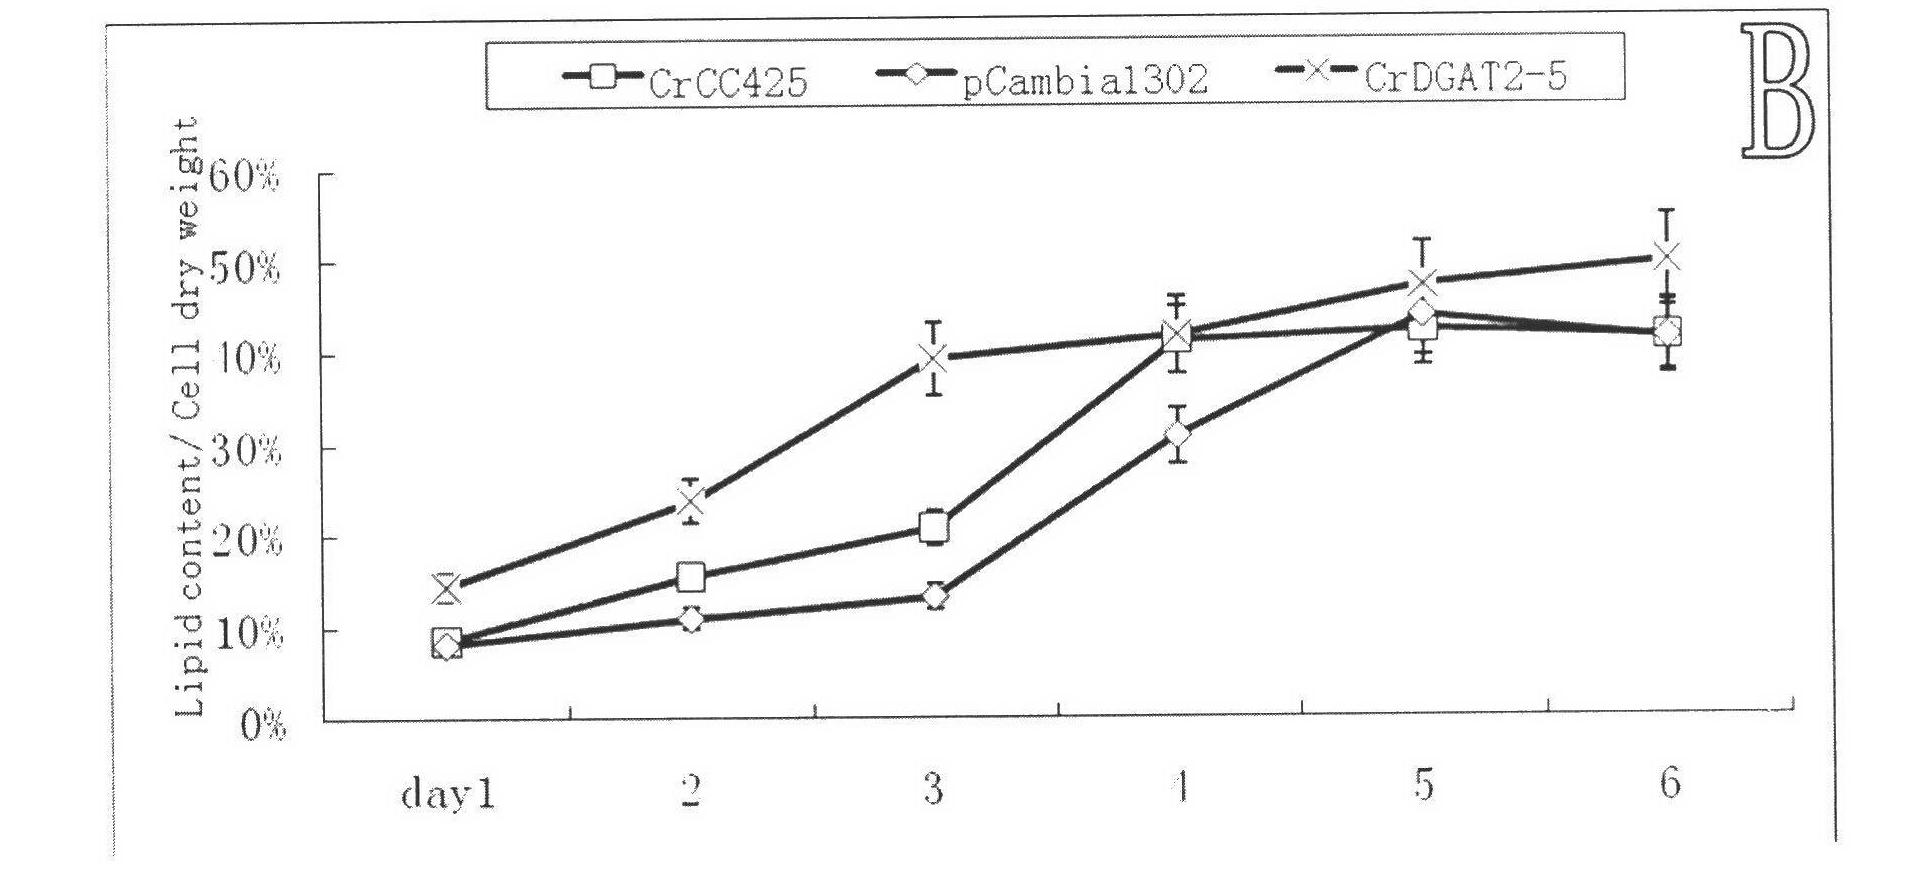 Chlamydomonas reinhardtii lipid metabolism gene CrDGAT2-5, encoding protein thereof, and application thereof